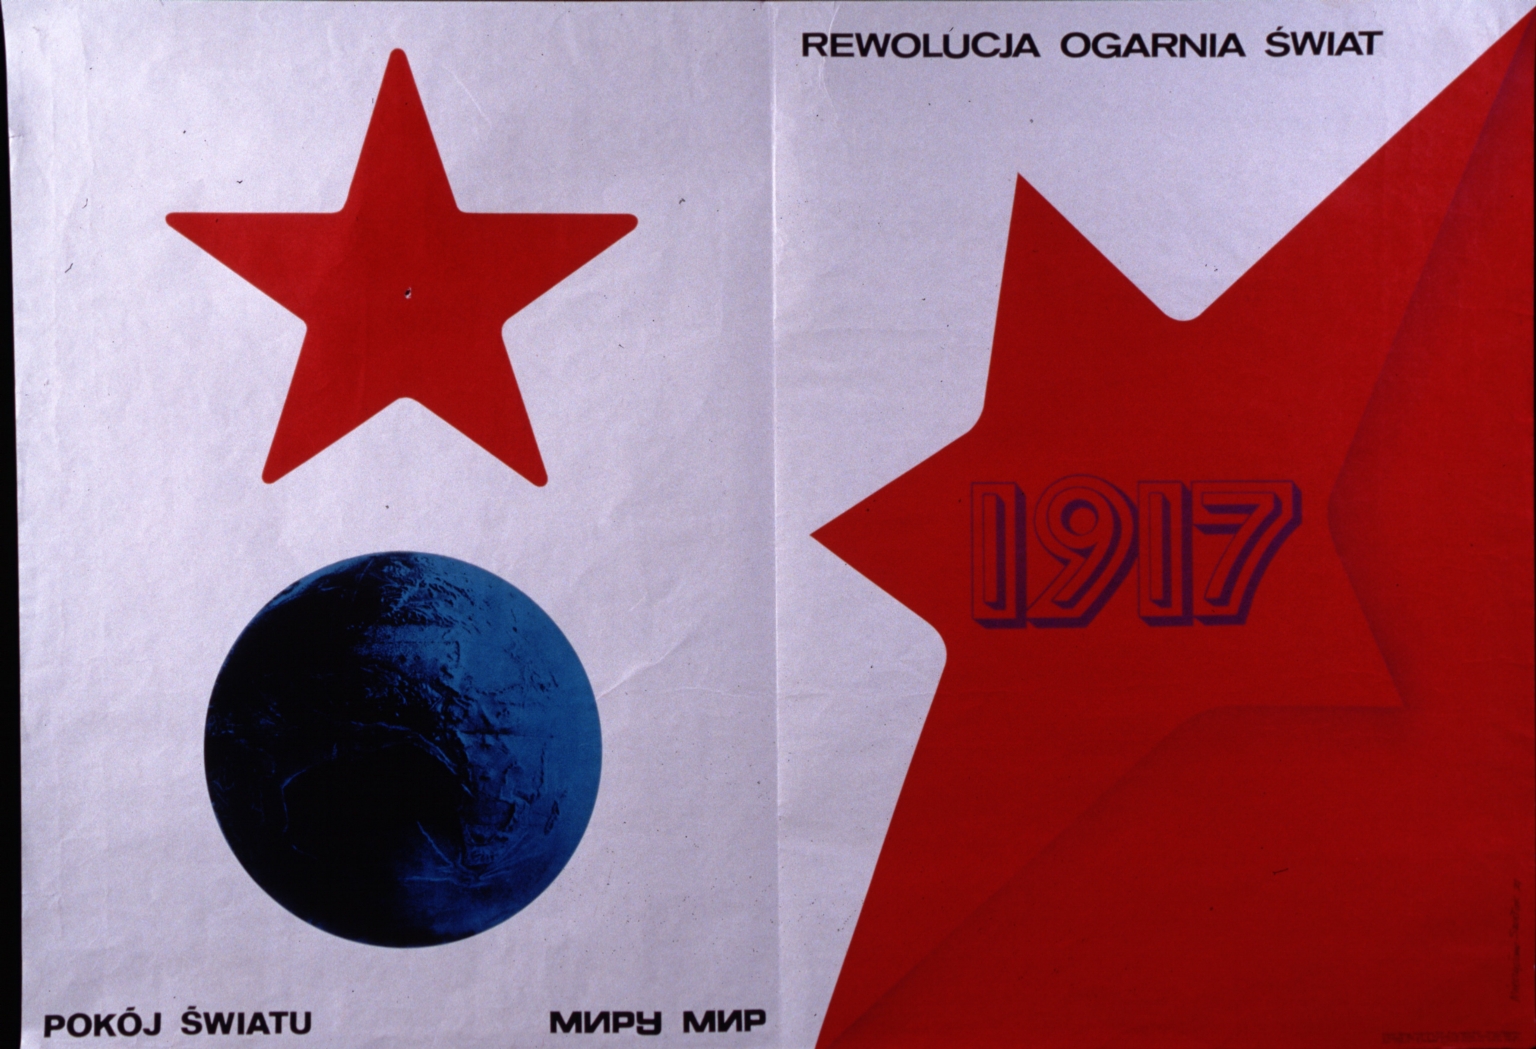 1917 rewolucja organia swiat: pokoj swiatu = miru mir